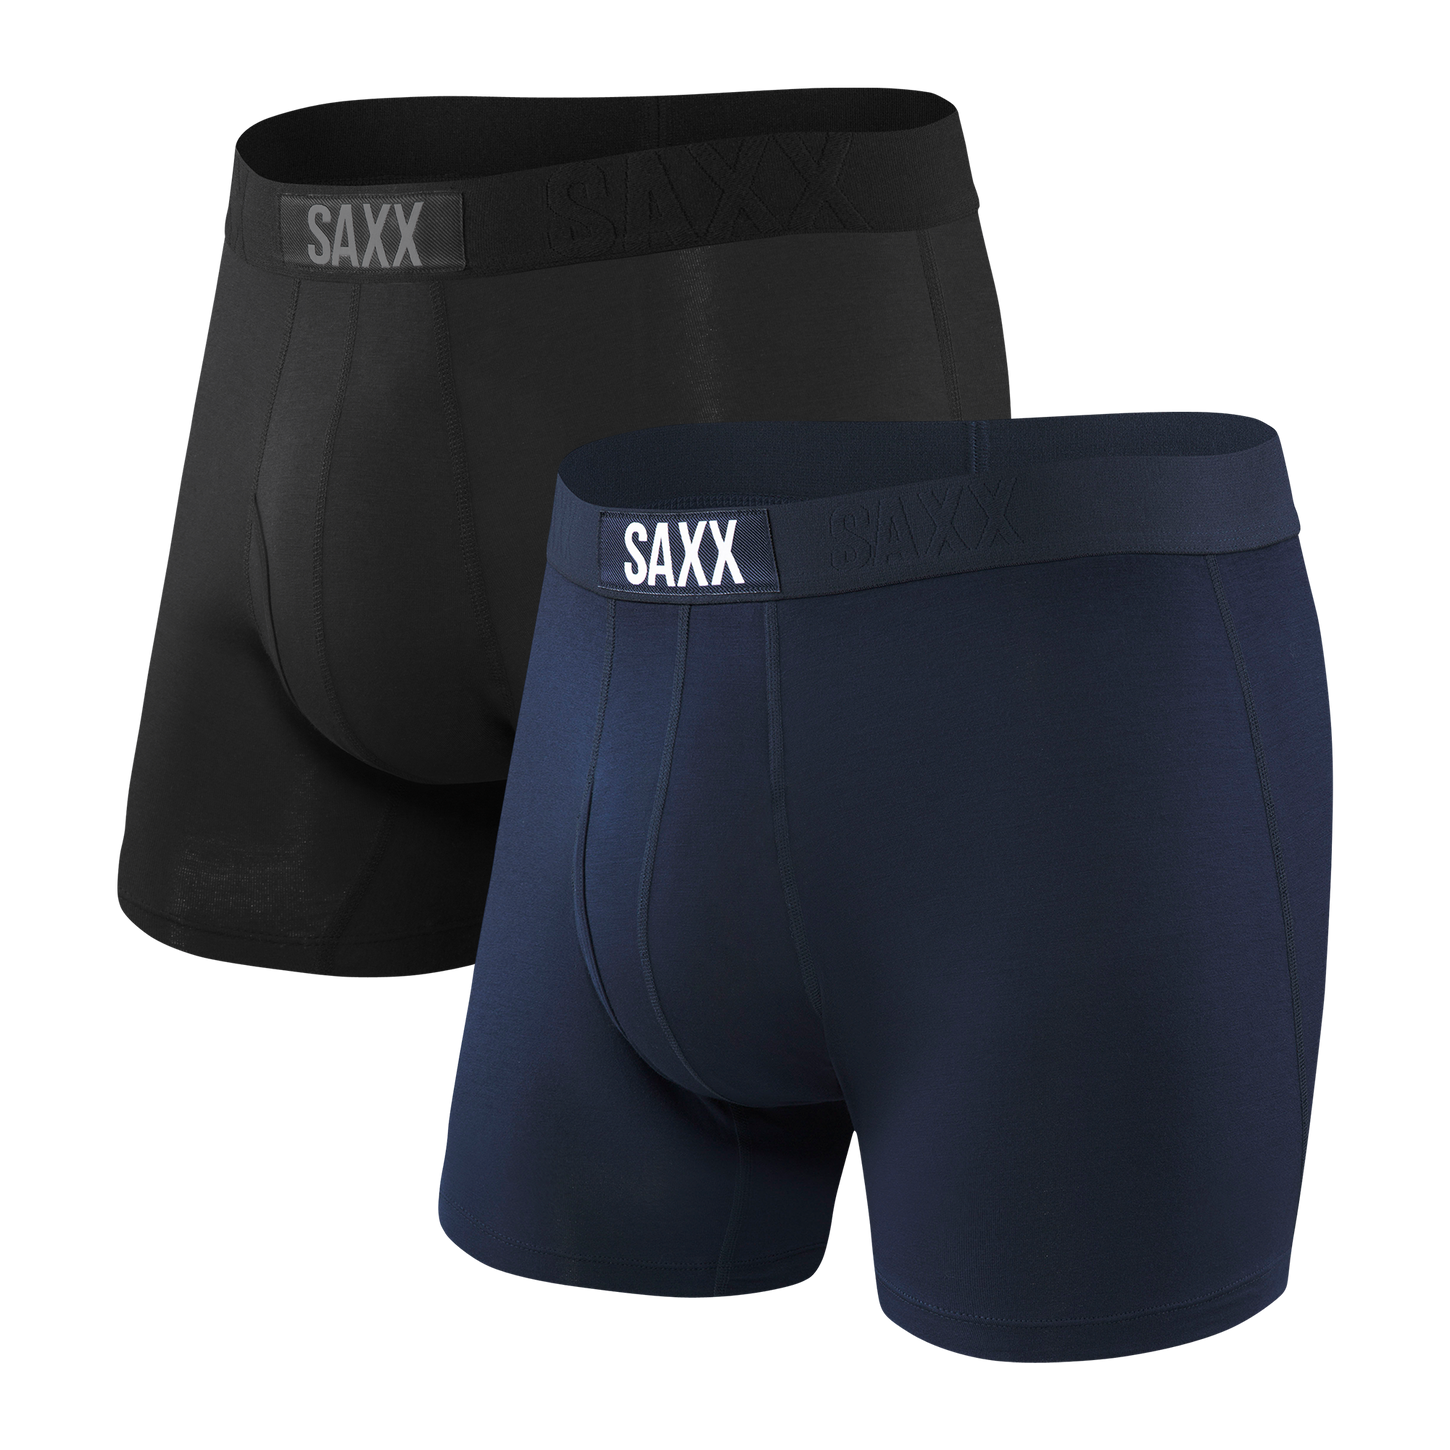 Saxx Men's Ultra Boxer Brief 2-Pack Apparel SAXX Small Black/Navy 